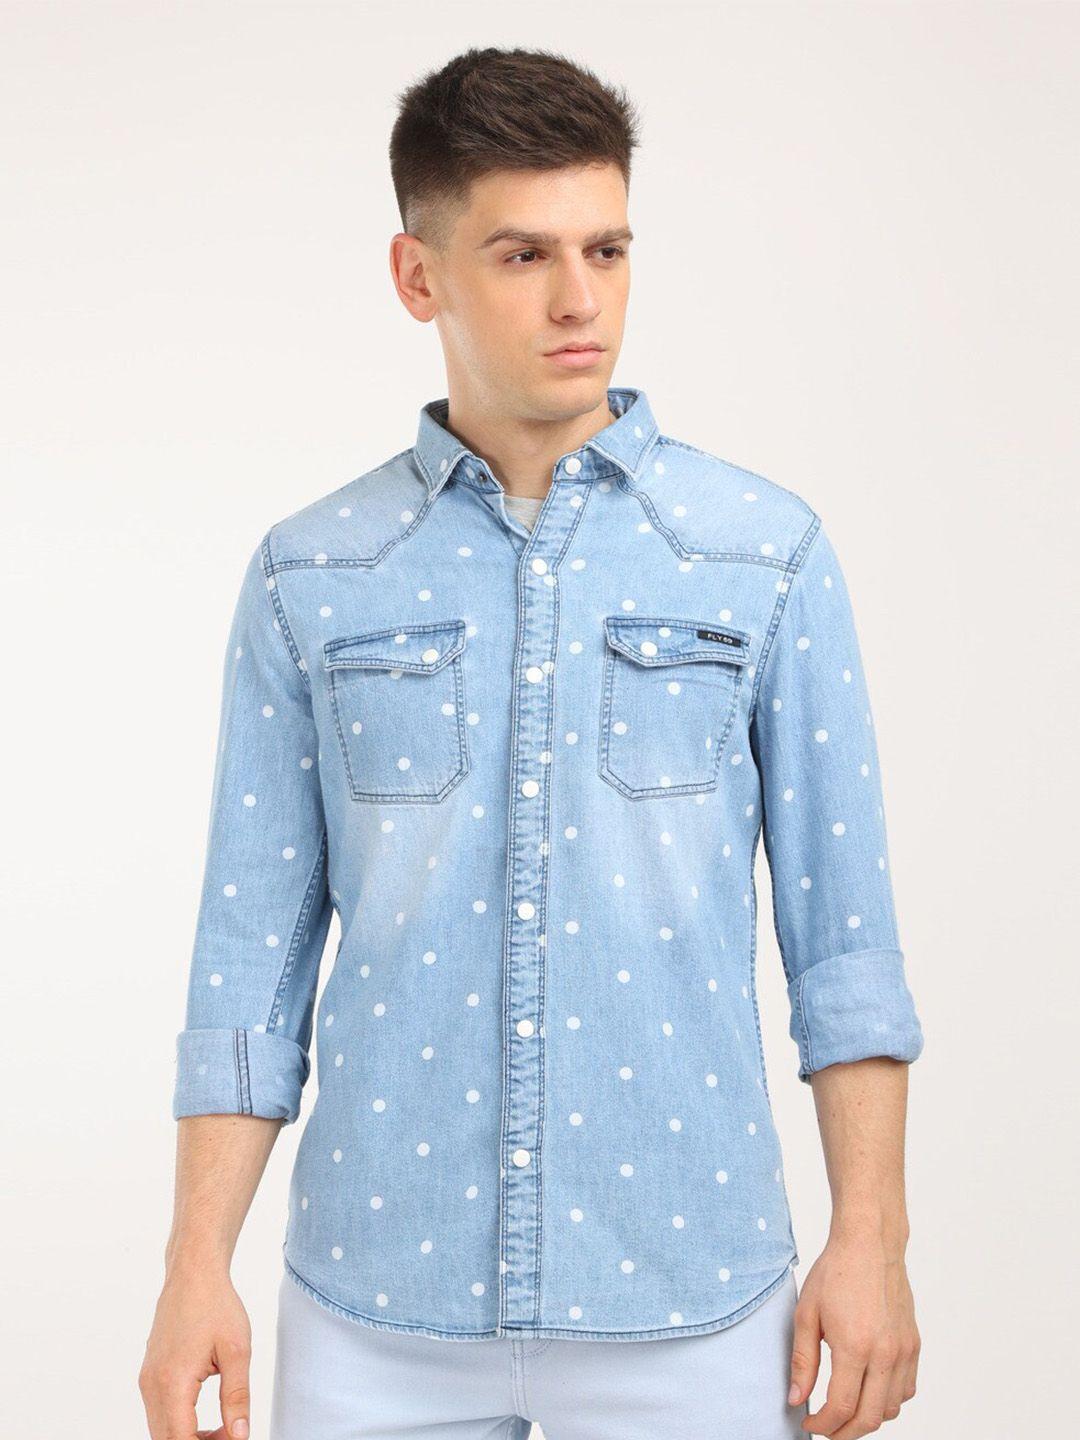 fly 69 premium slim fit polka dots printed denim casual shirt